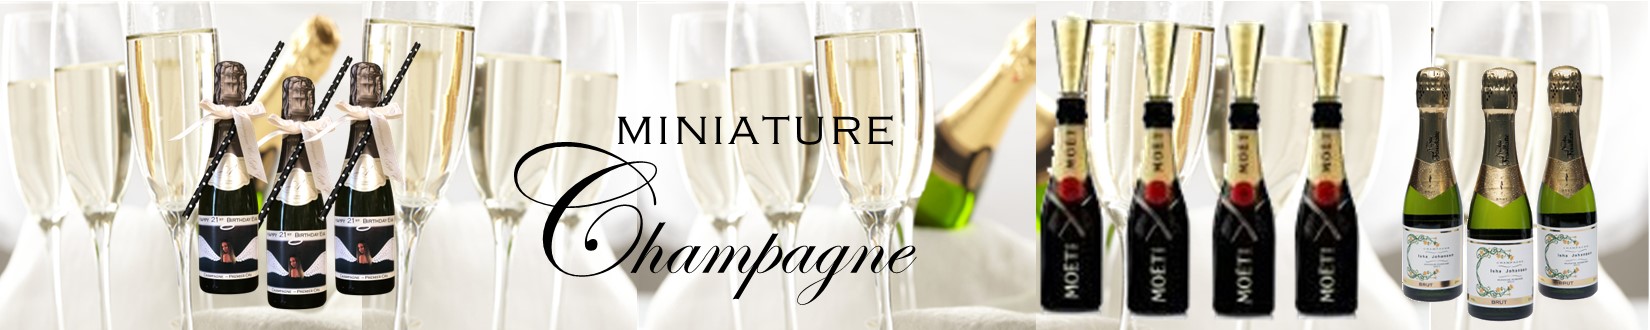 miniature-champagne-banner